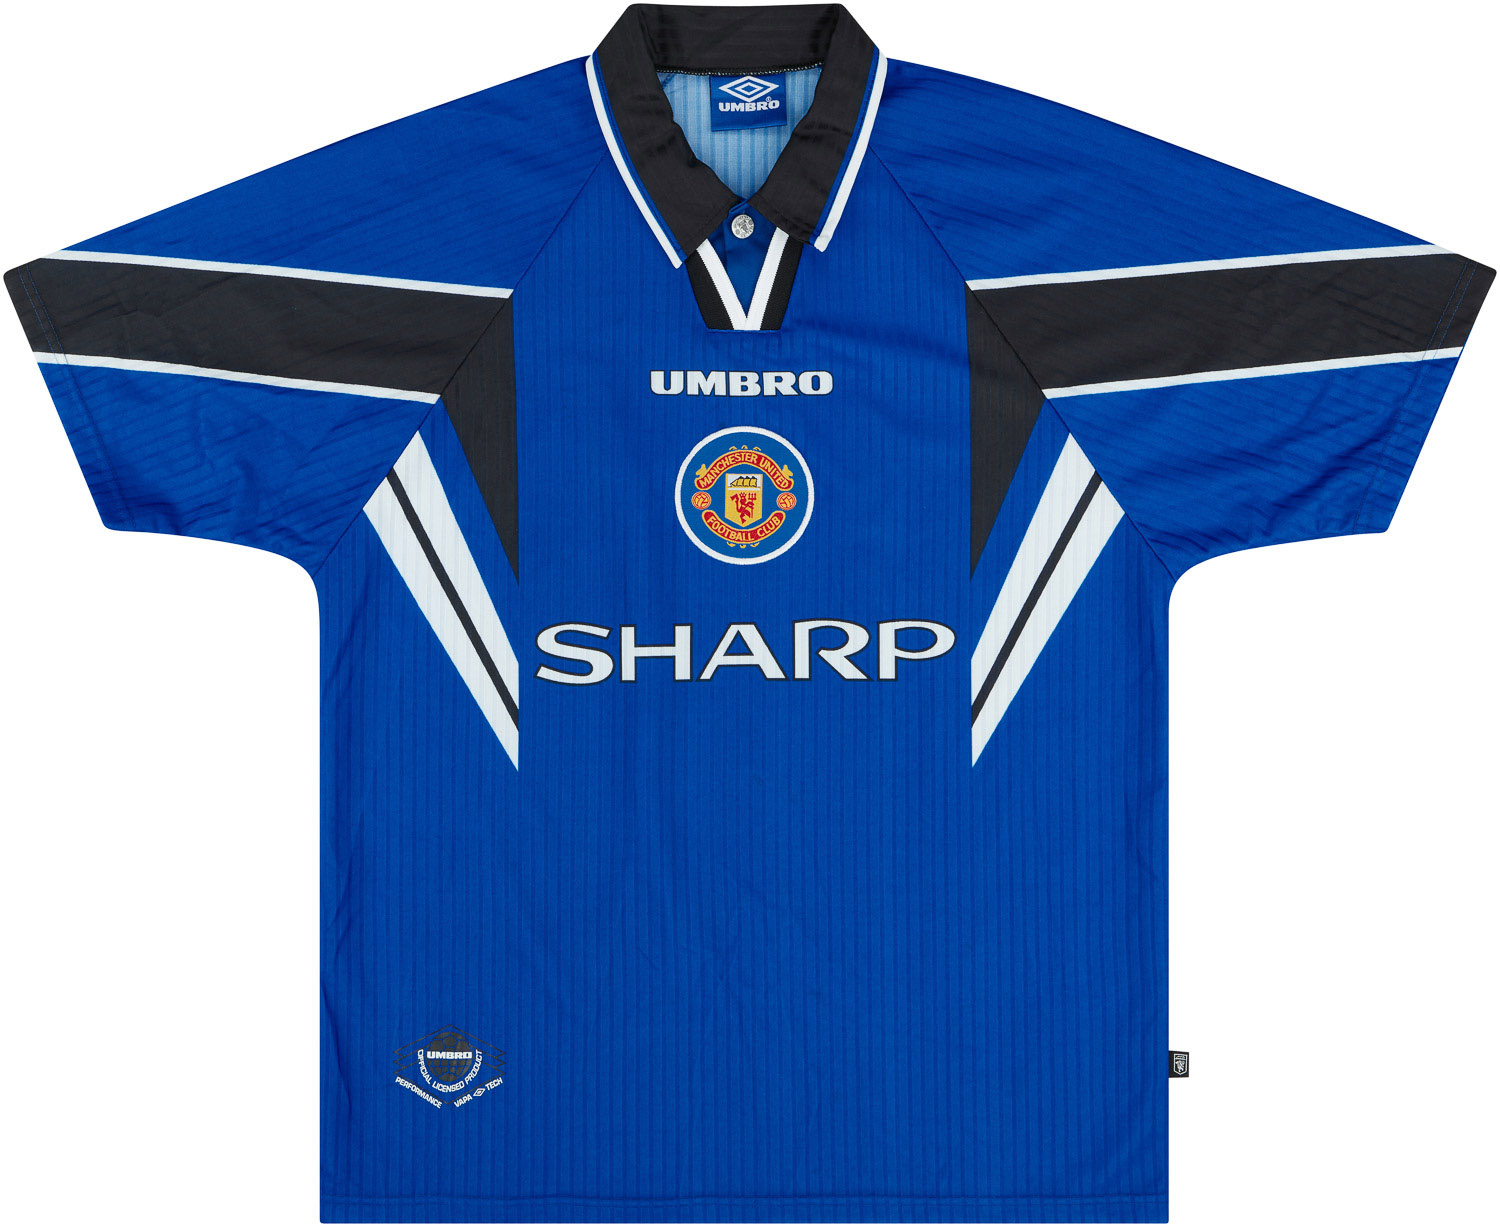 1996-98 Manchester United Third Shirt